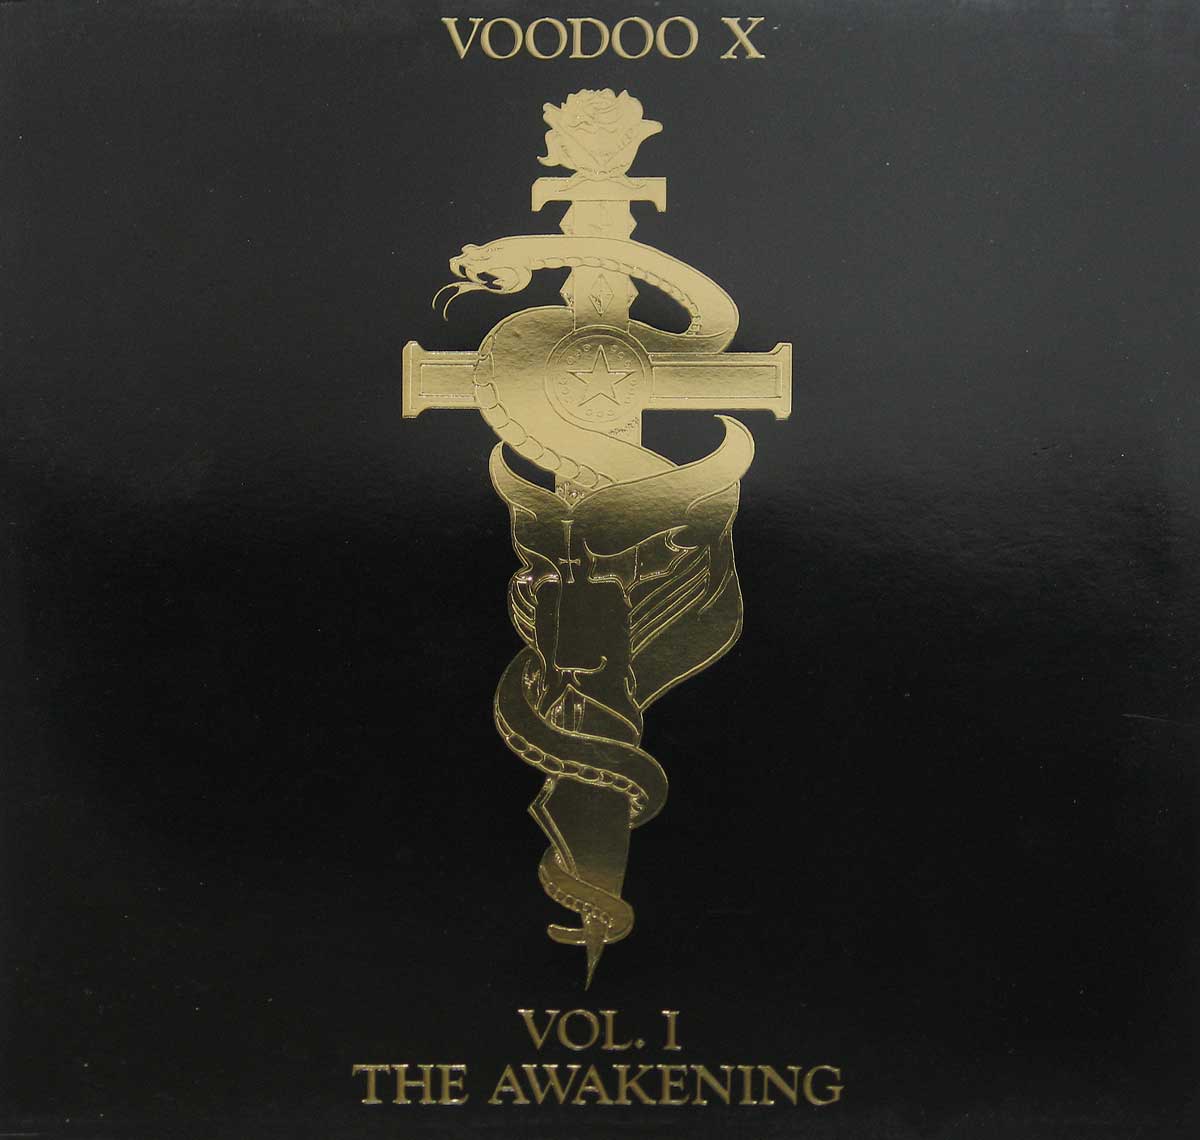 large album front cover photo of: VOODOO X - Vol 1 The Awakening Hard Rock 1989  12" VINYL LP ALBUM 